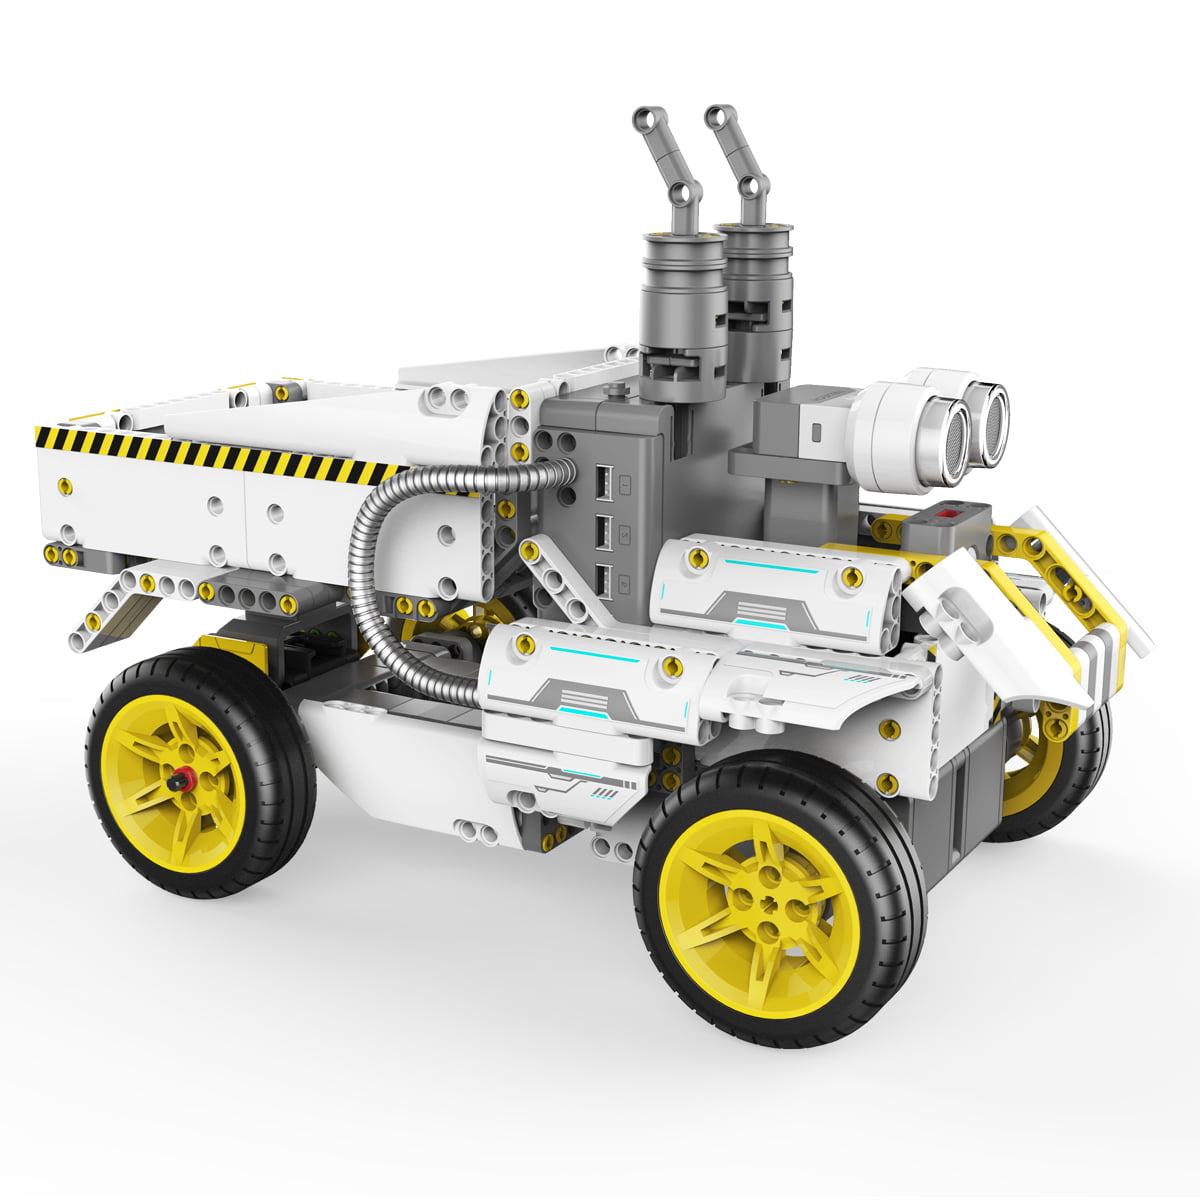 Ubtech JRA0203 Jimu Robot Builderbots Series Overdrive Kit $59.99 Free Shipping 